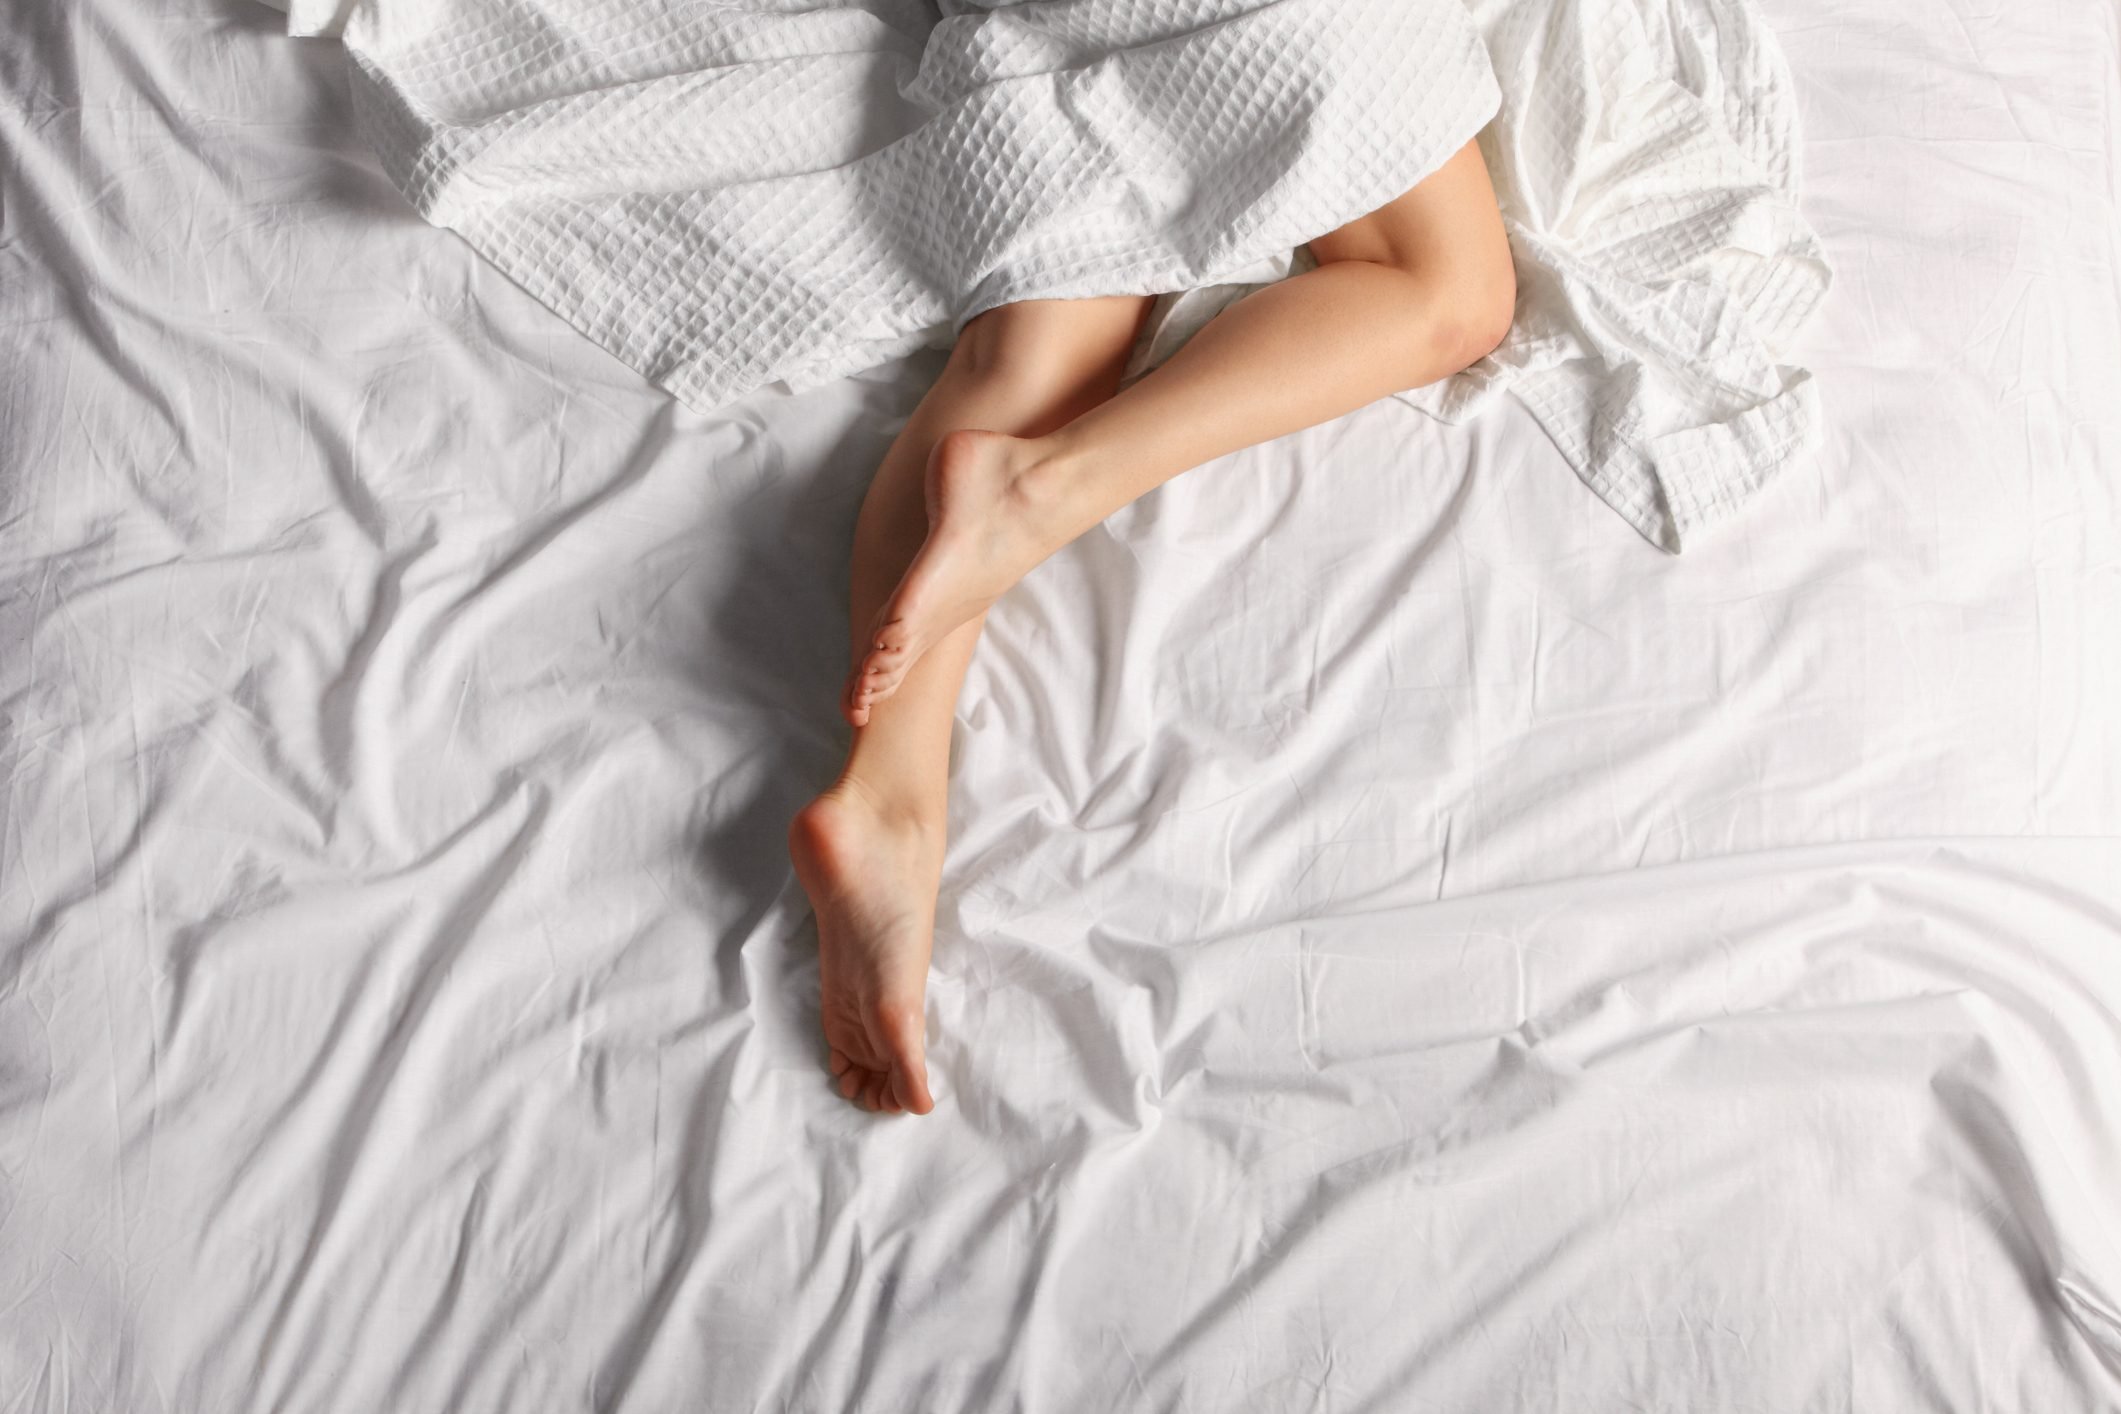 Should You Stop Wearing Underwear in Bed?